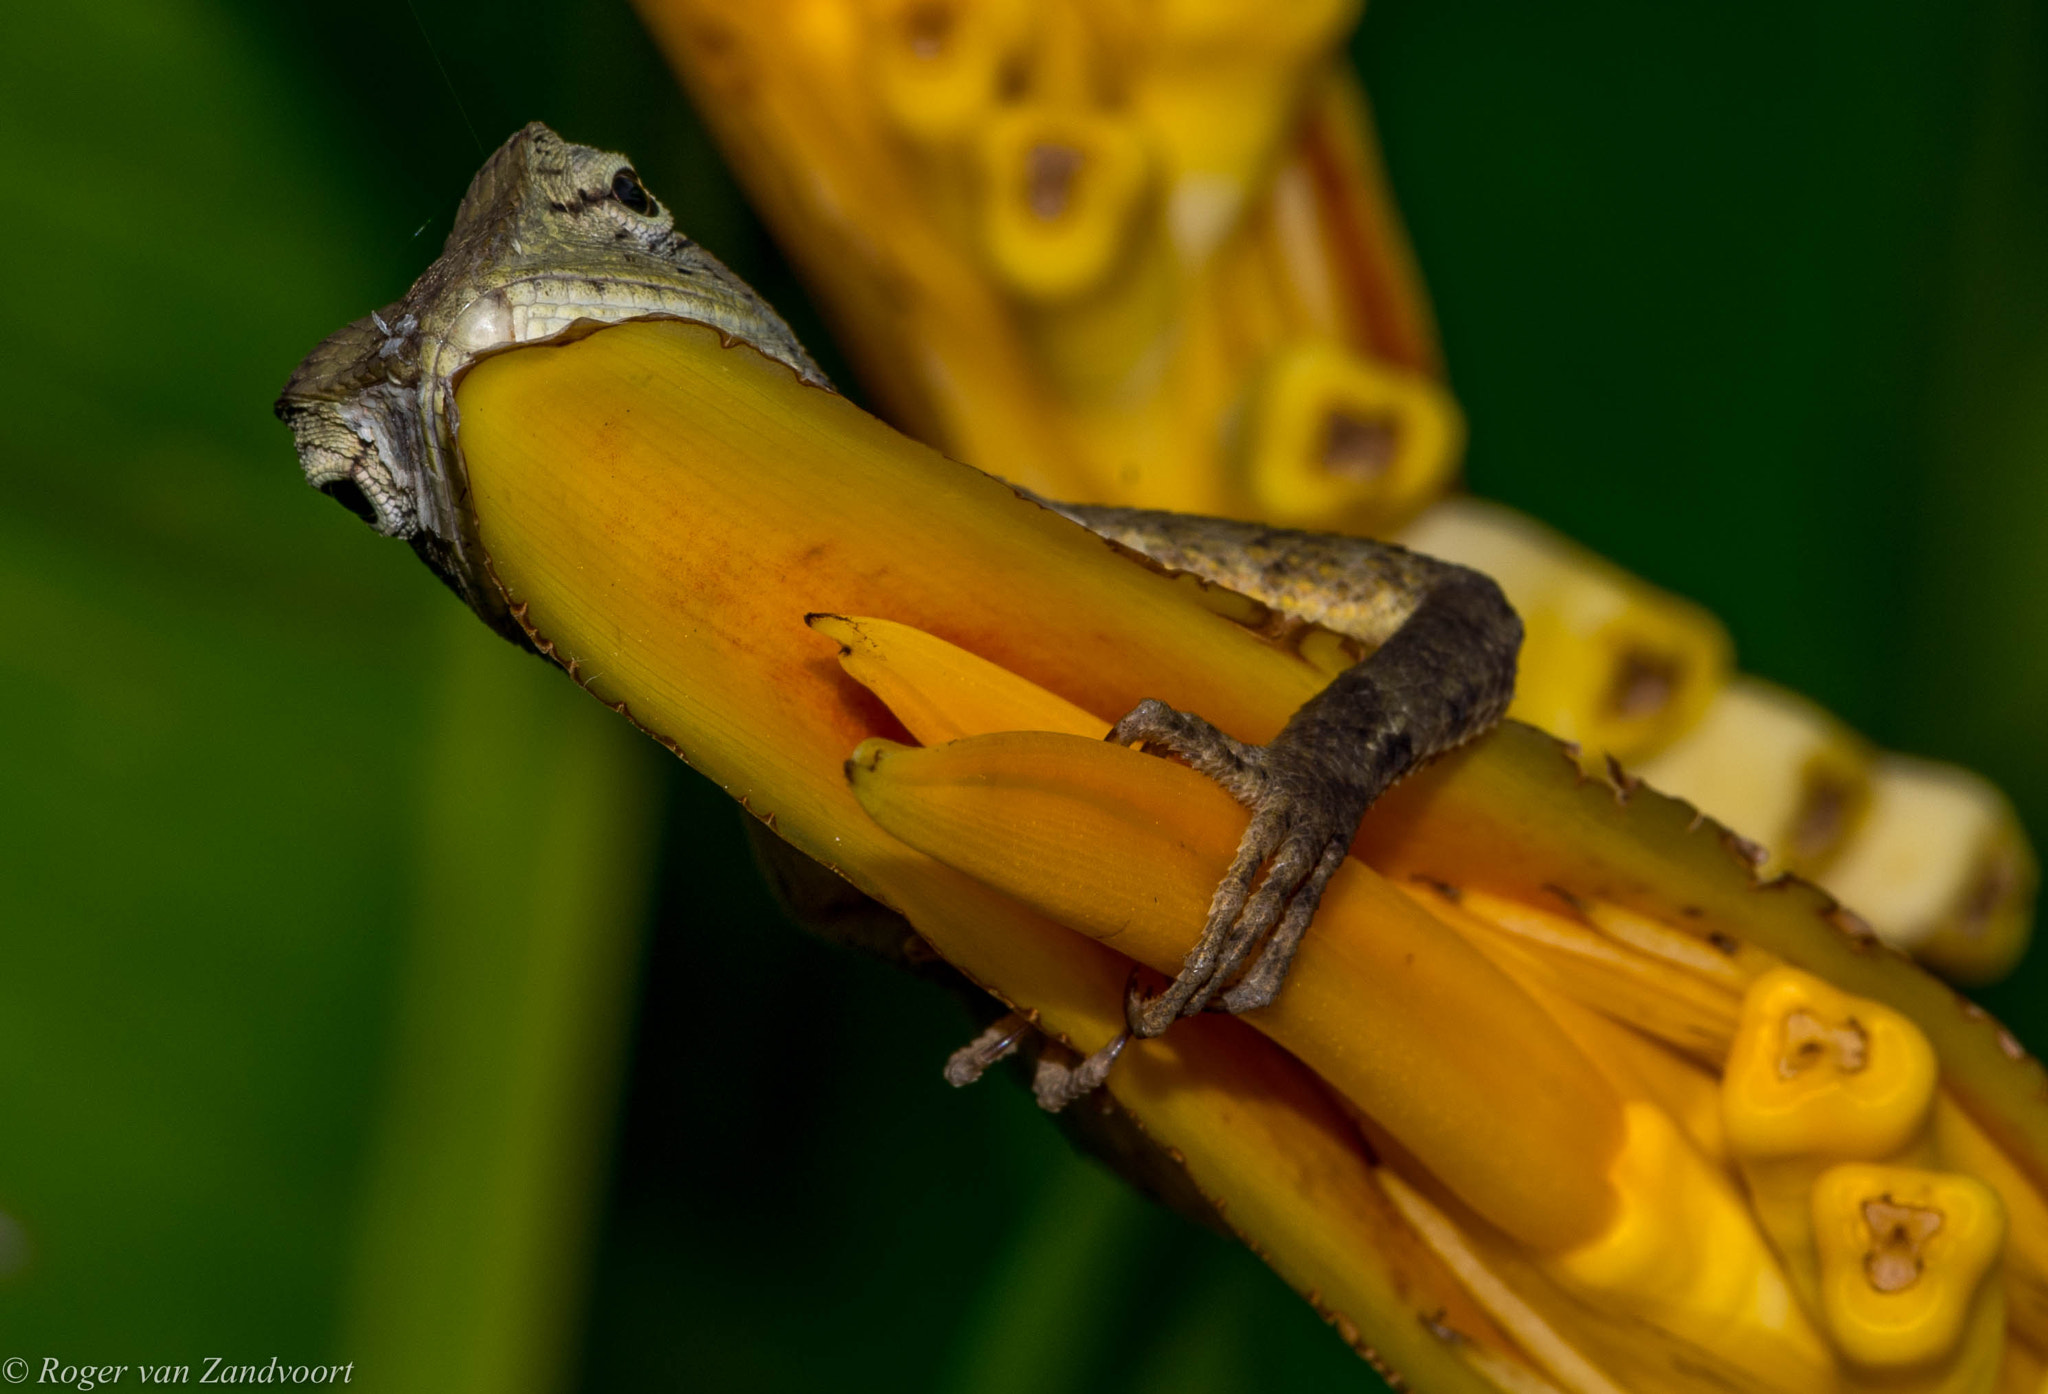 Pentax K-1 sample photo. Stealthy tree lizard photography